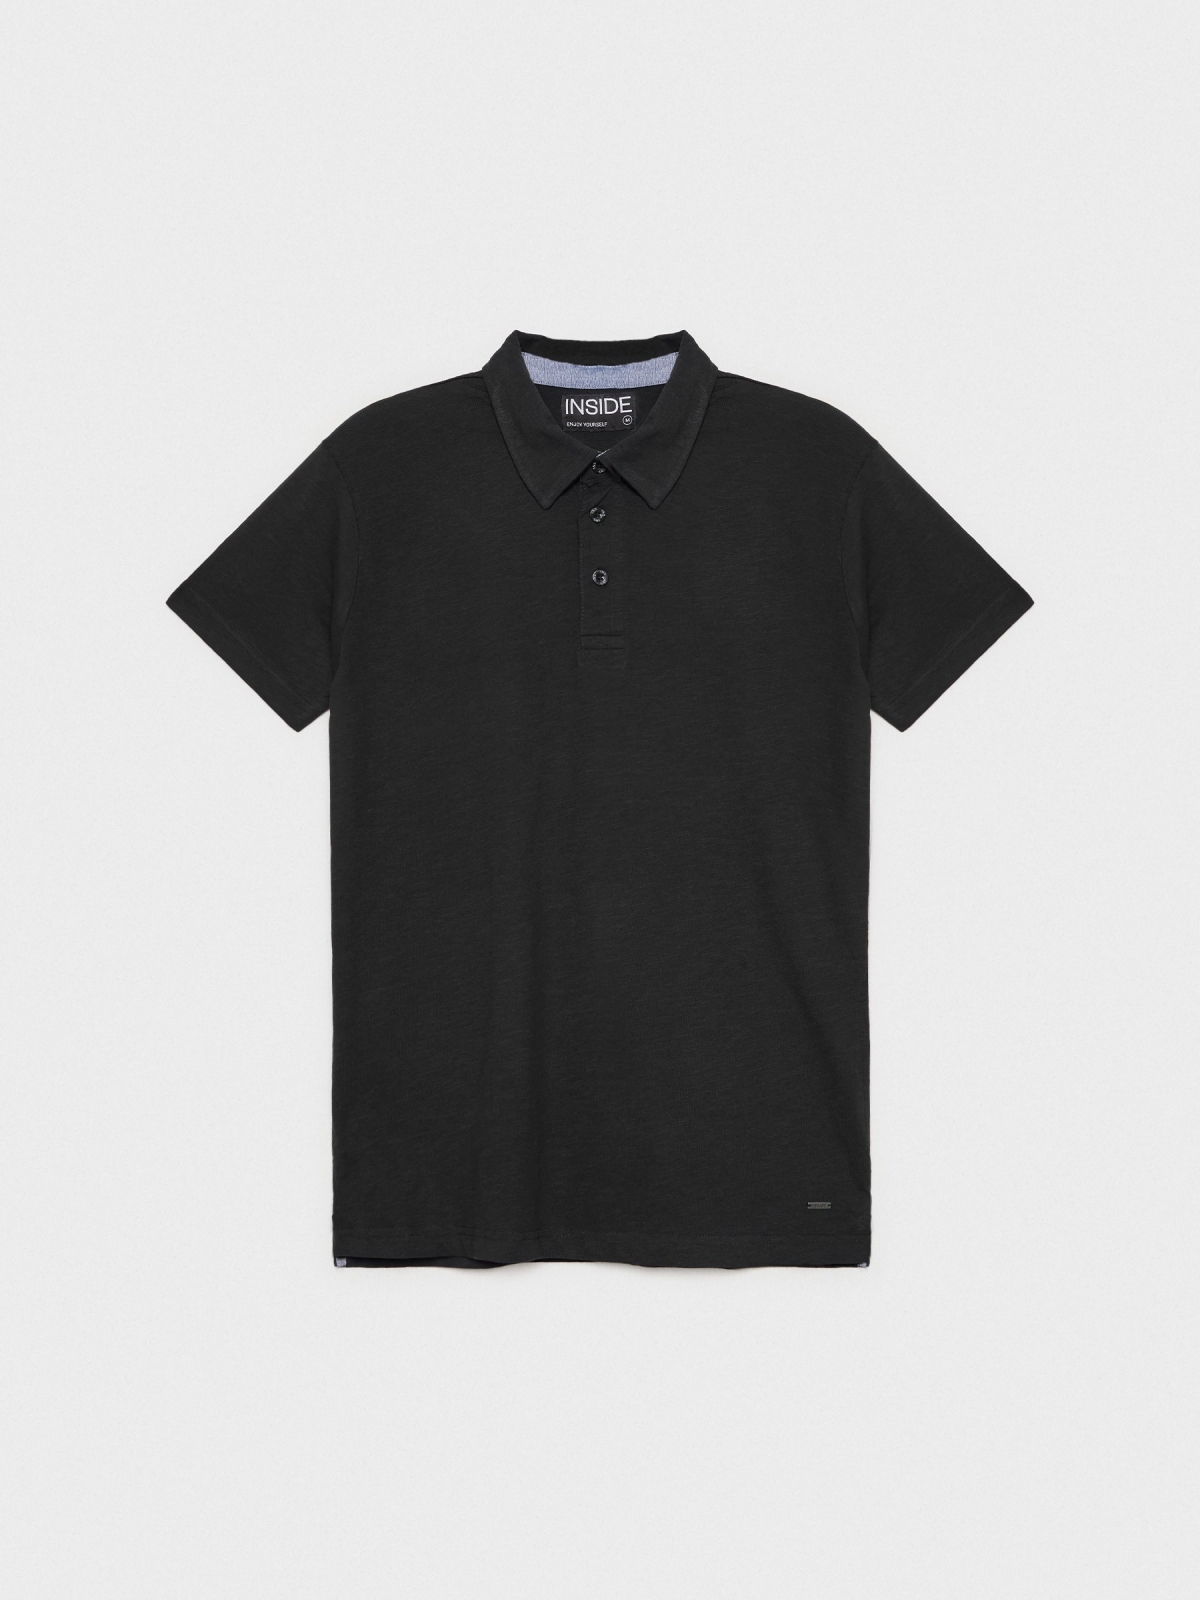  Basic polo shirt classic collar black